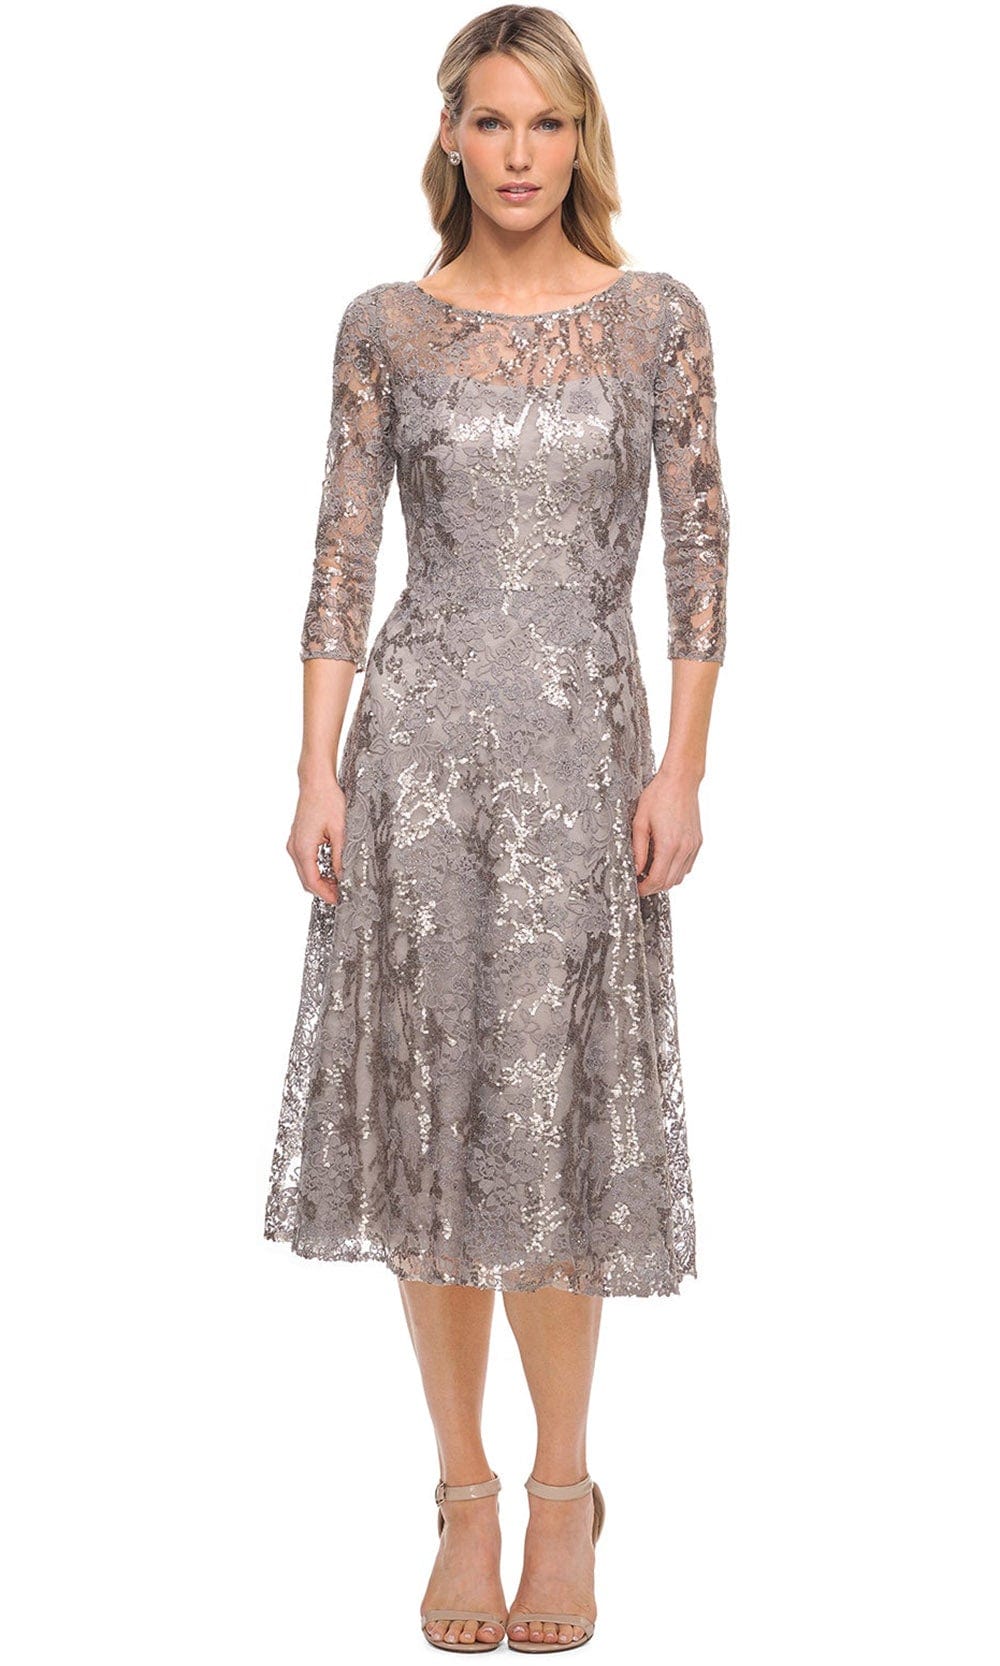 La Femme 29993 - Sparkly Embroidered Tea Length Dress
